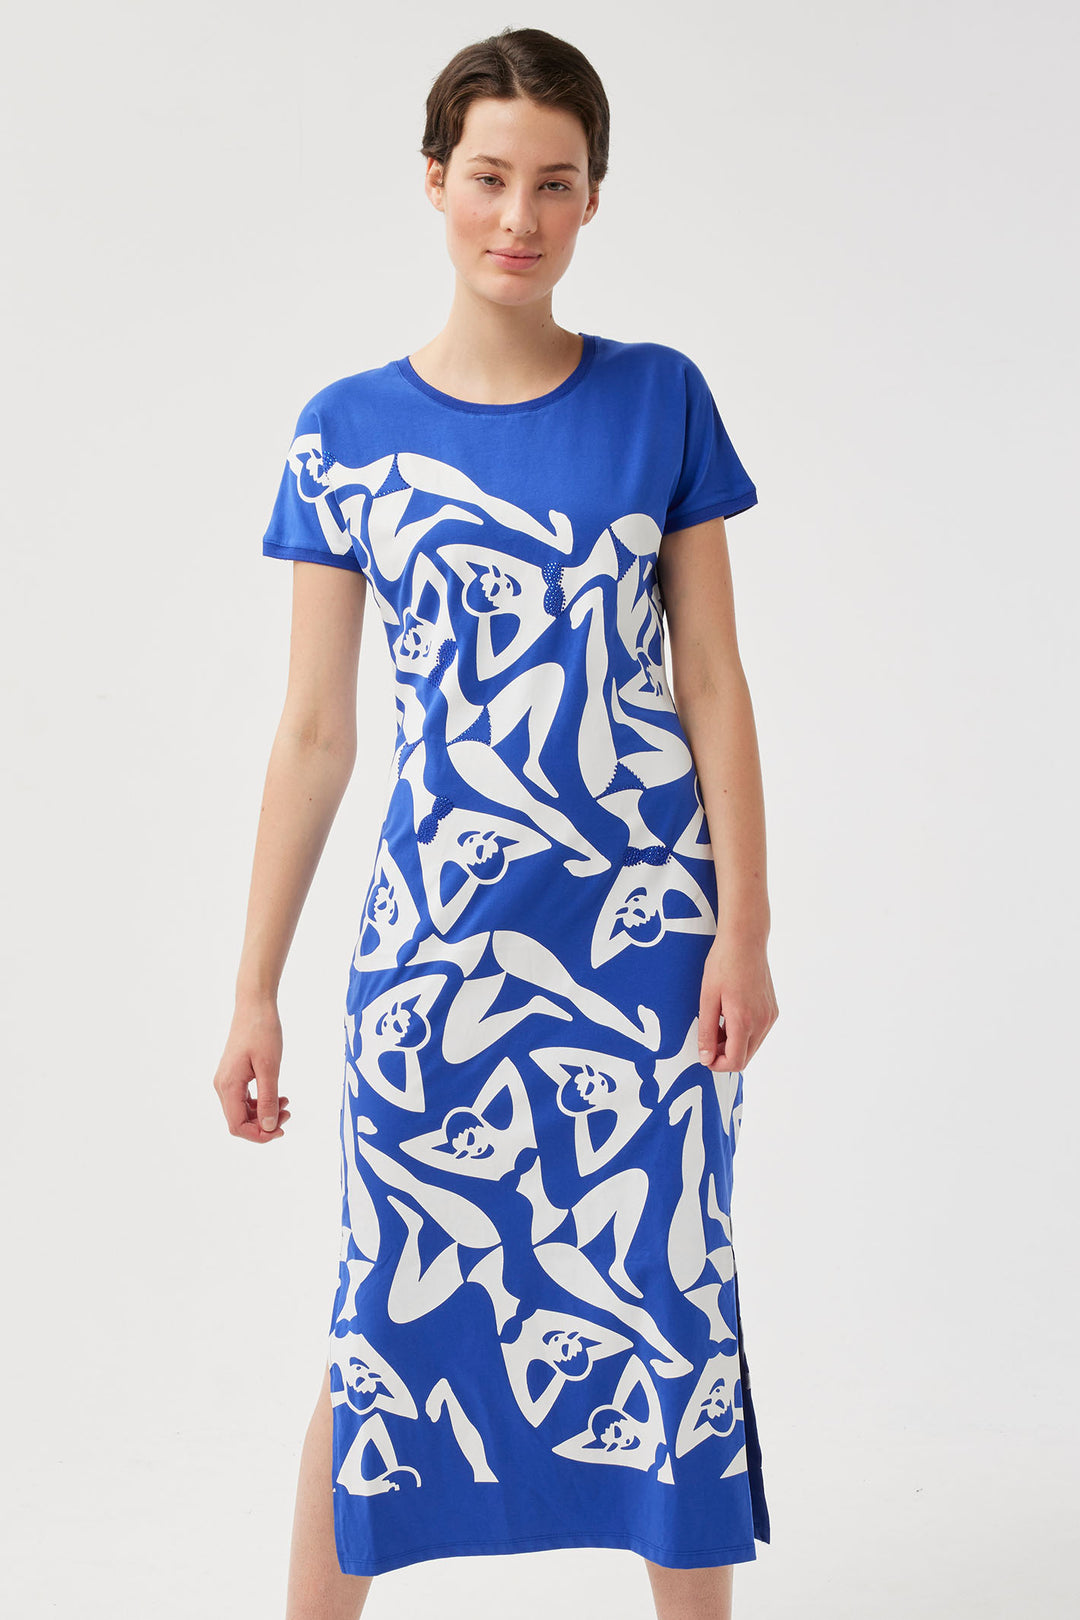 Leo & Ugo TEJR662 Blue White Sunbather Print T-Shirt Dress - Experience Boutique